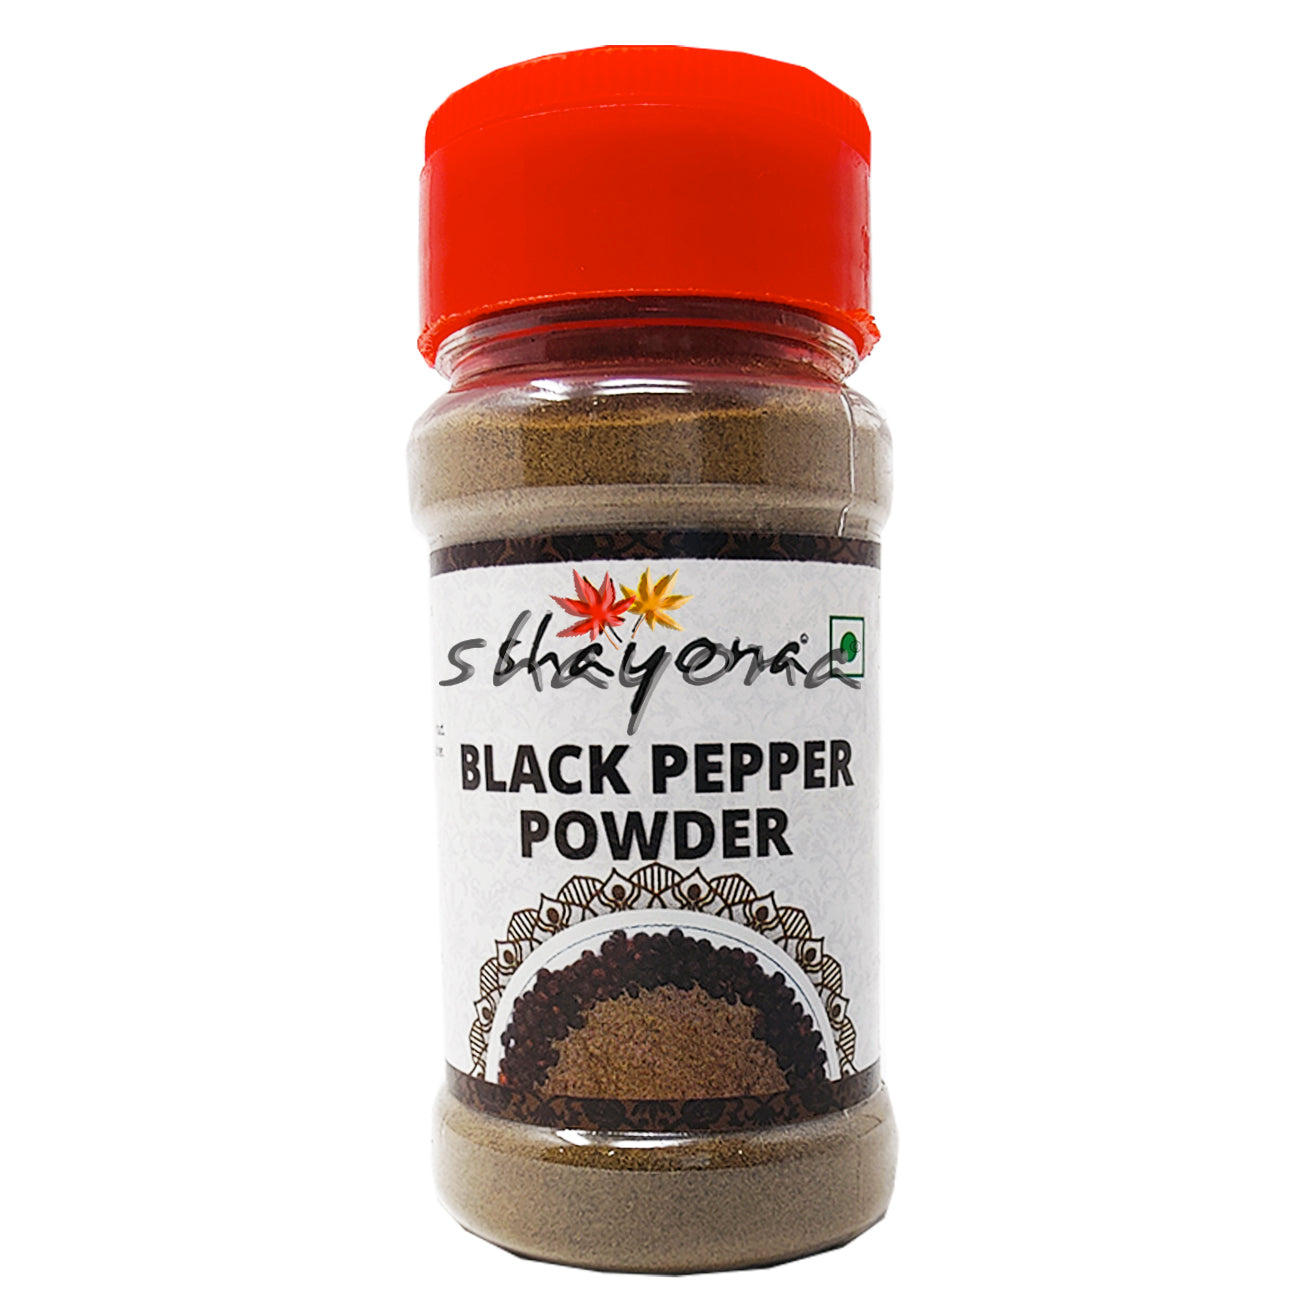 Shayona Black Pepper Powder